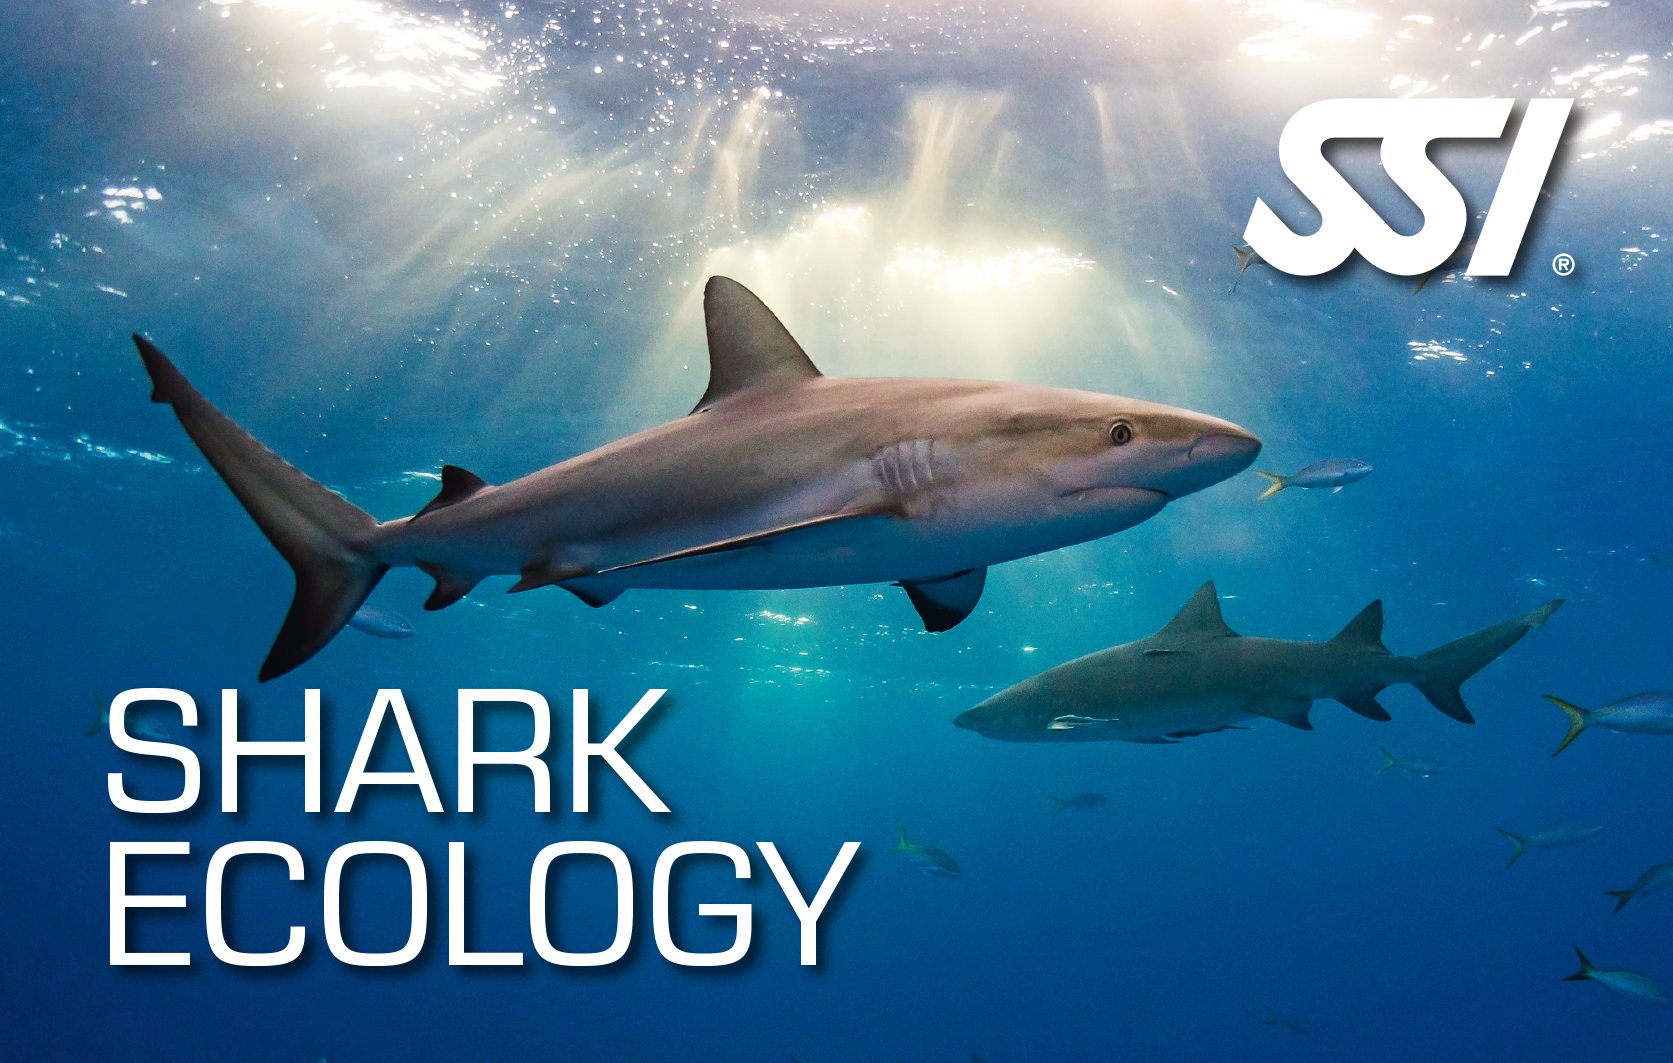 SSI Shark Ecology | SSI Shark Ecology Course Course Course | Shark Ecology | Specialty Course | Diving Course